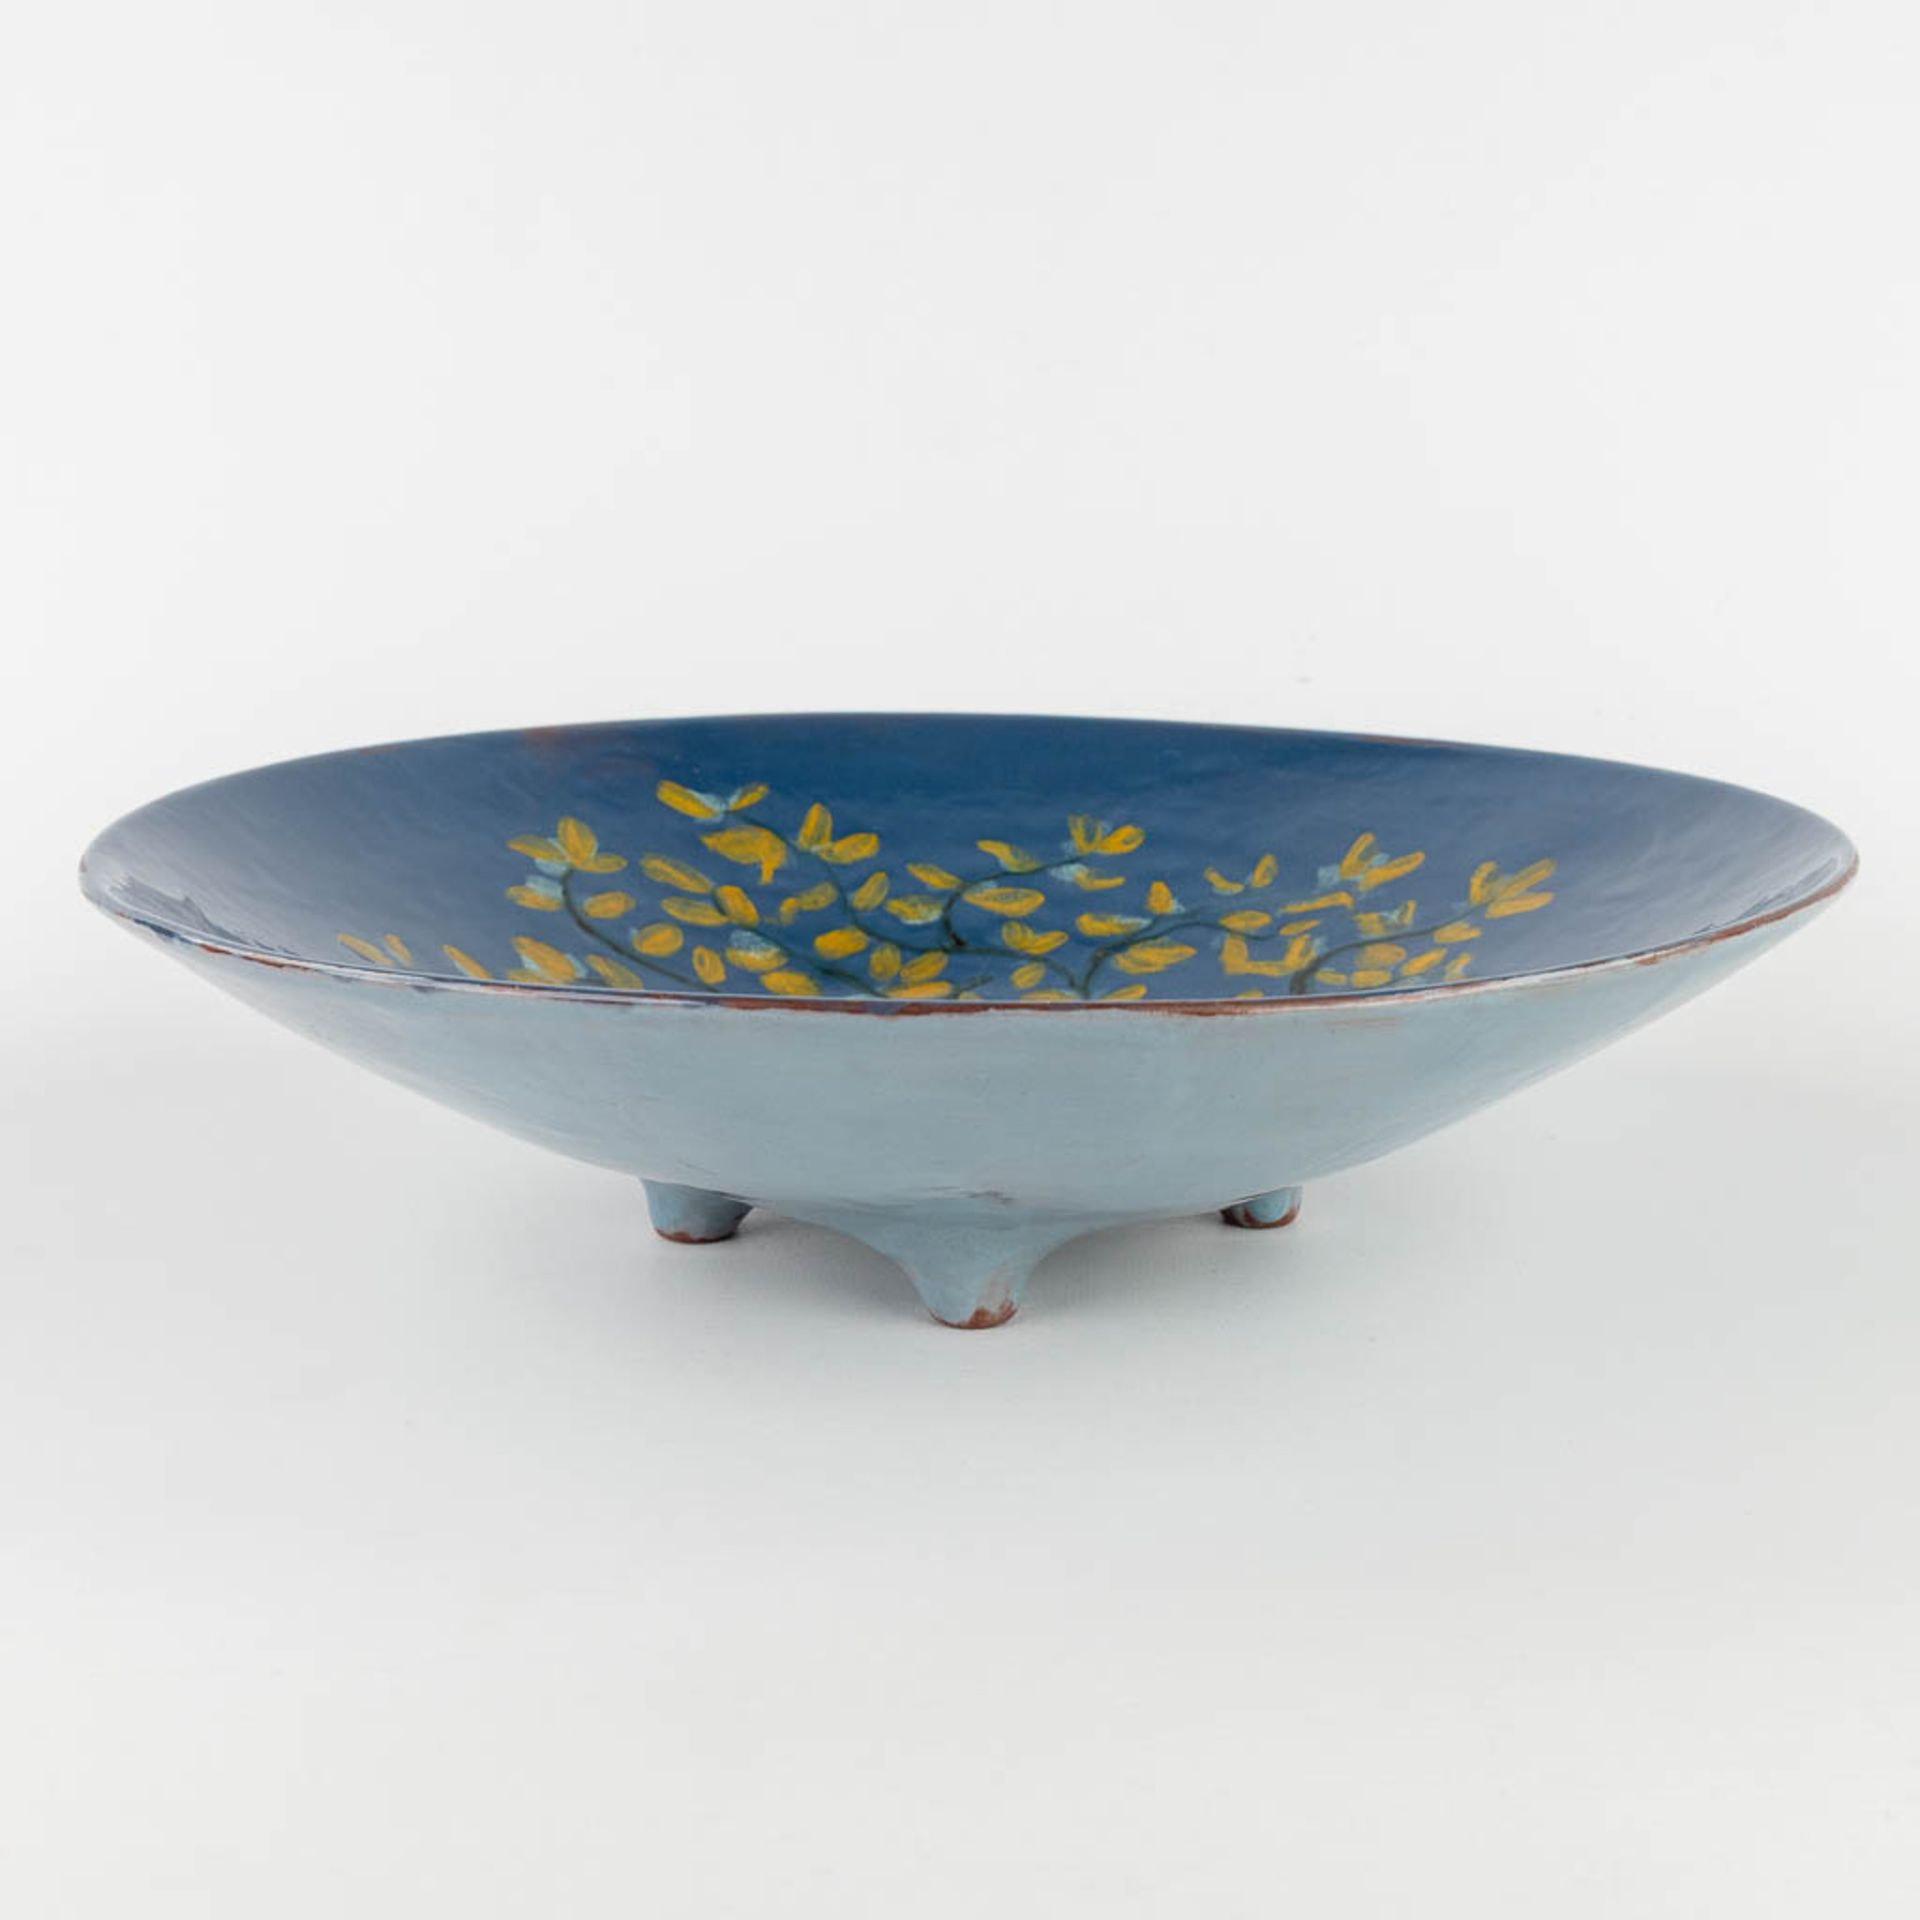 Beatty PERMEKE (1916-1991) 'Bowl' glazed ceramics. (H:8 x D:33,5 cm)